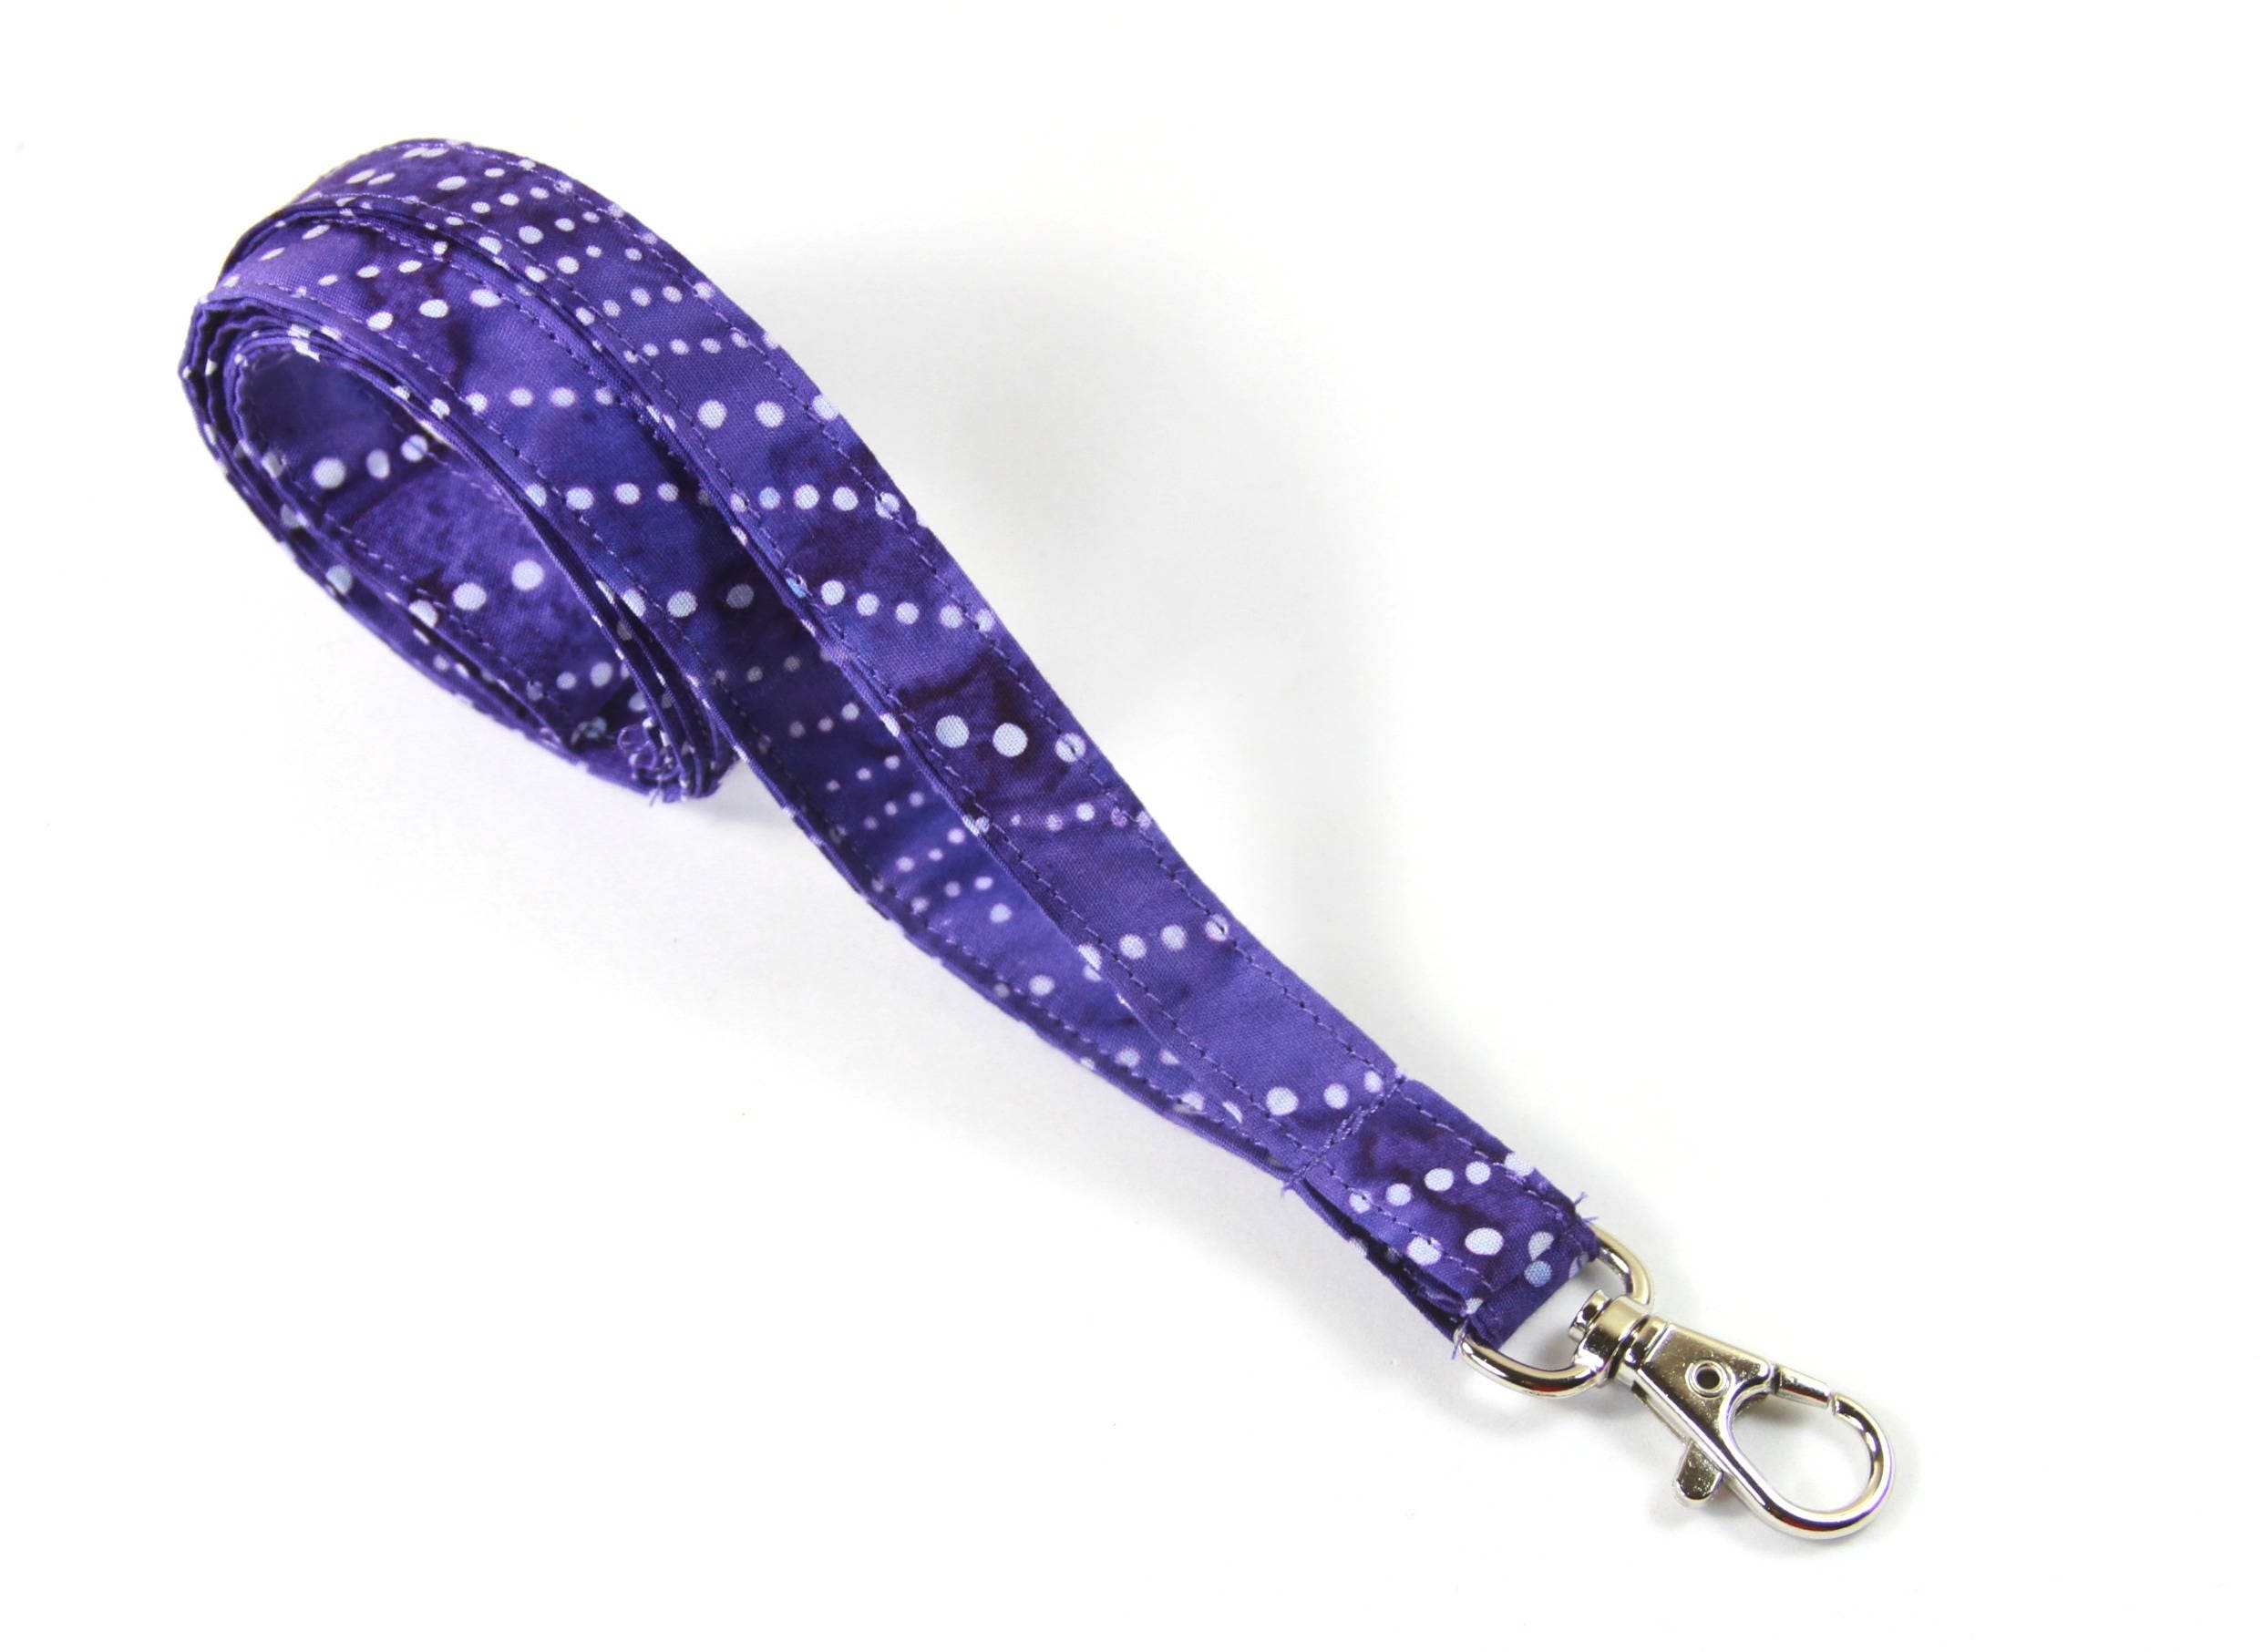 TIE DYE Fabric Lanyard, Tie Dye Badge Holder, Blue Purple Badge